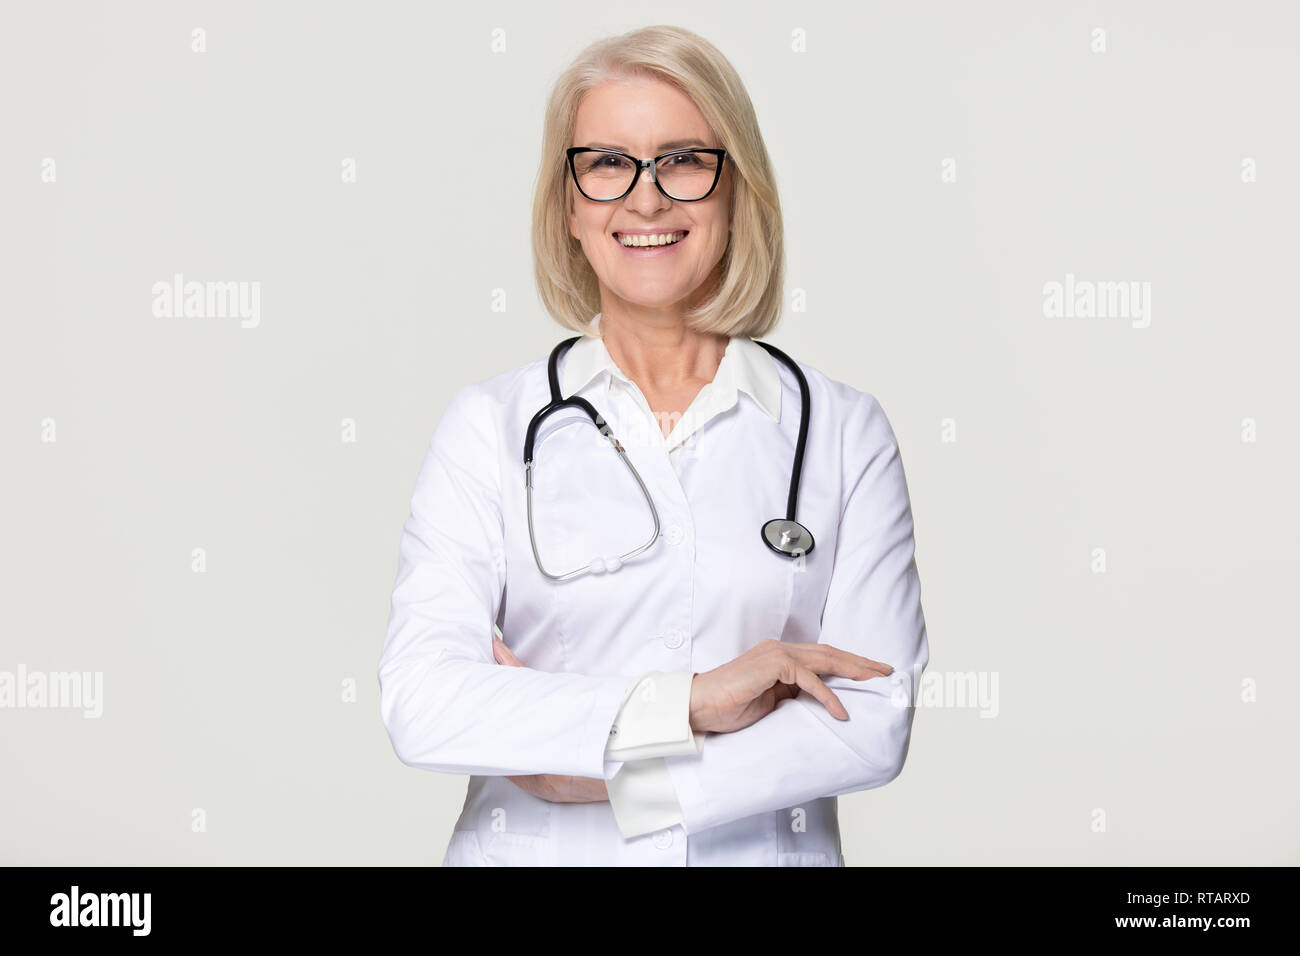 Gerne reife Frau Doktor Portrait auf grauem Hintergrund Stockfoto